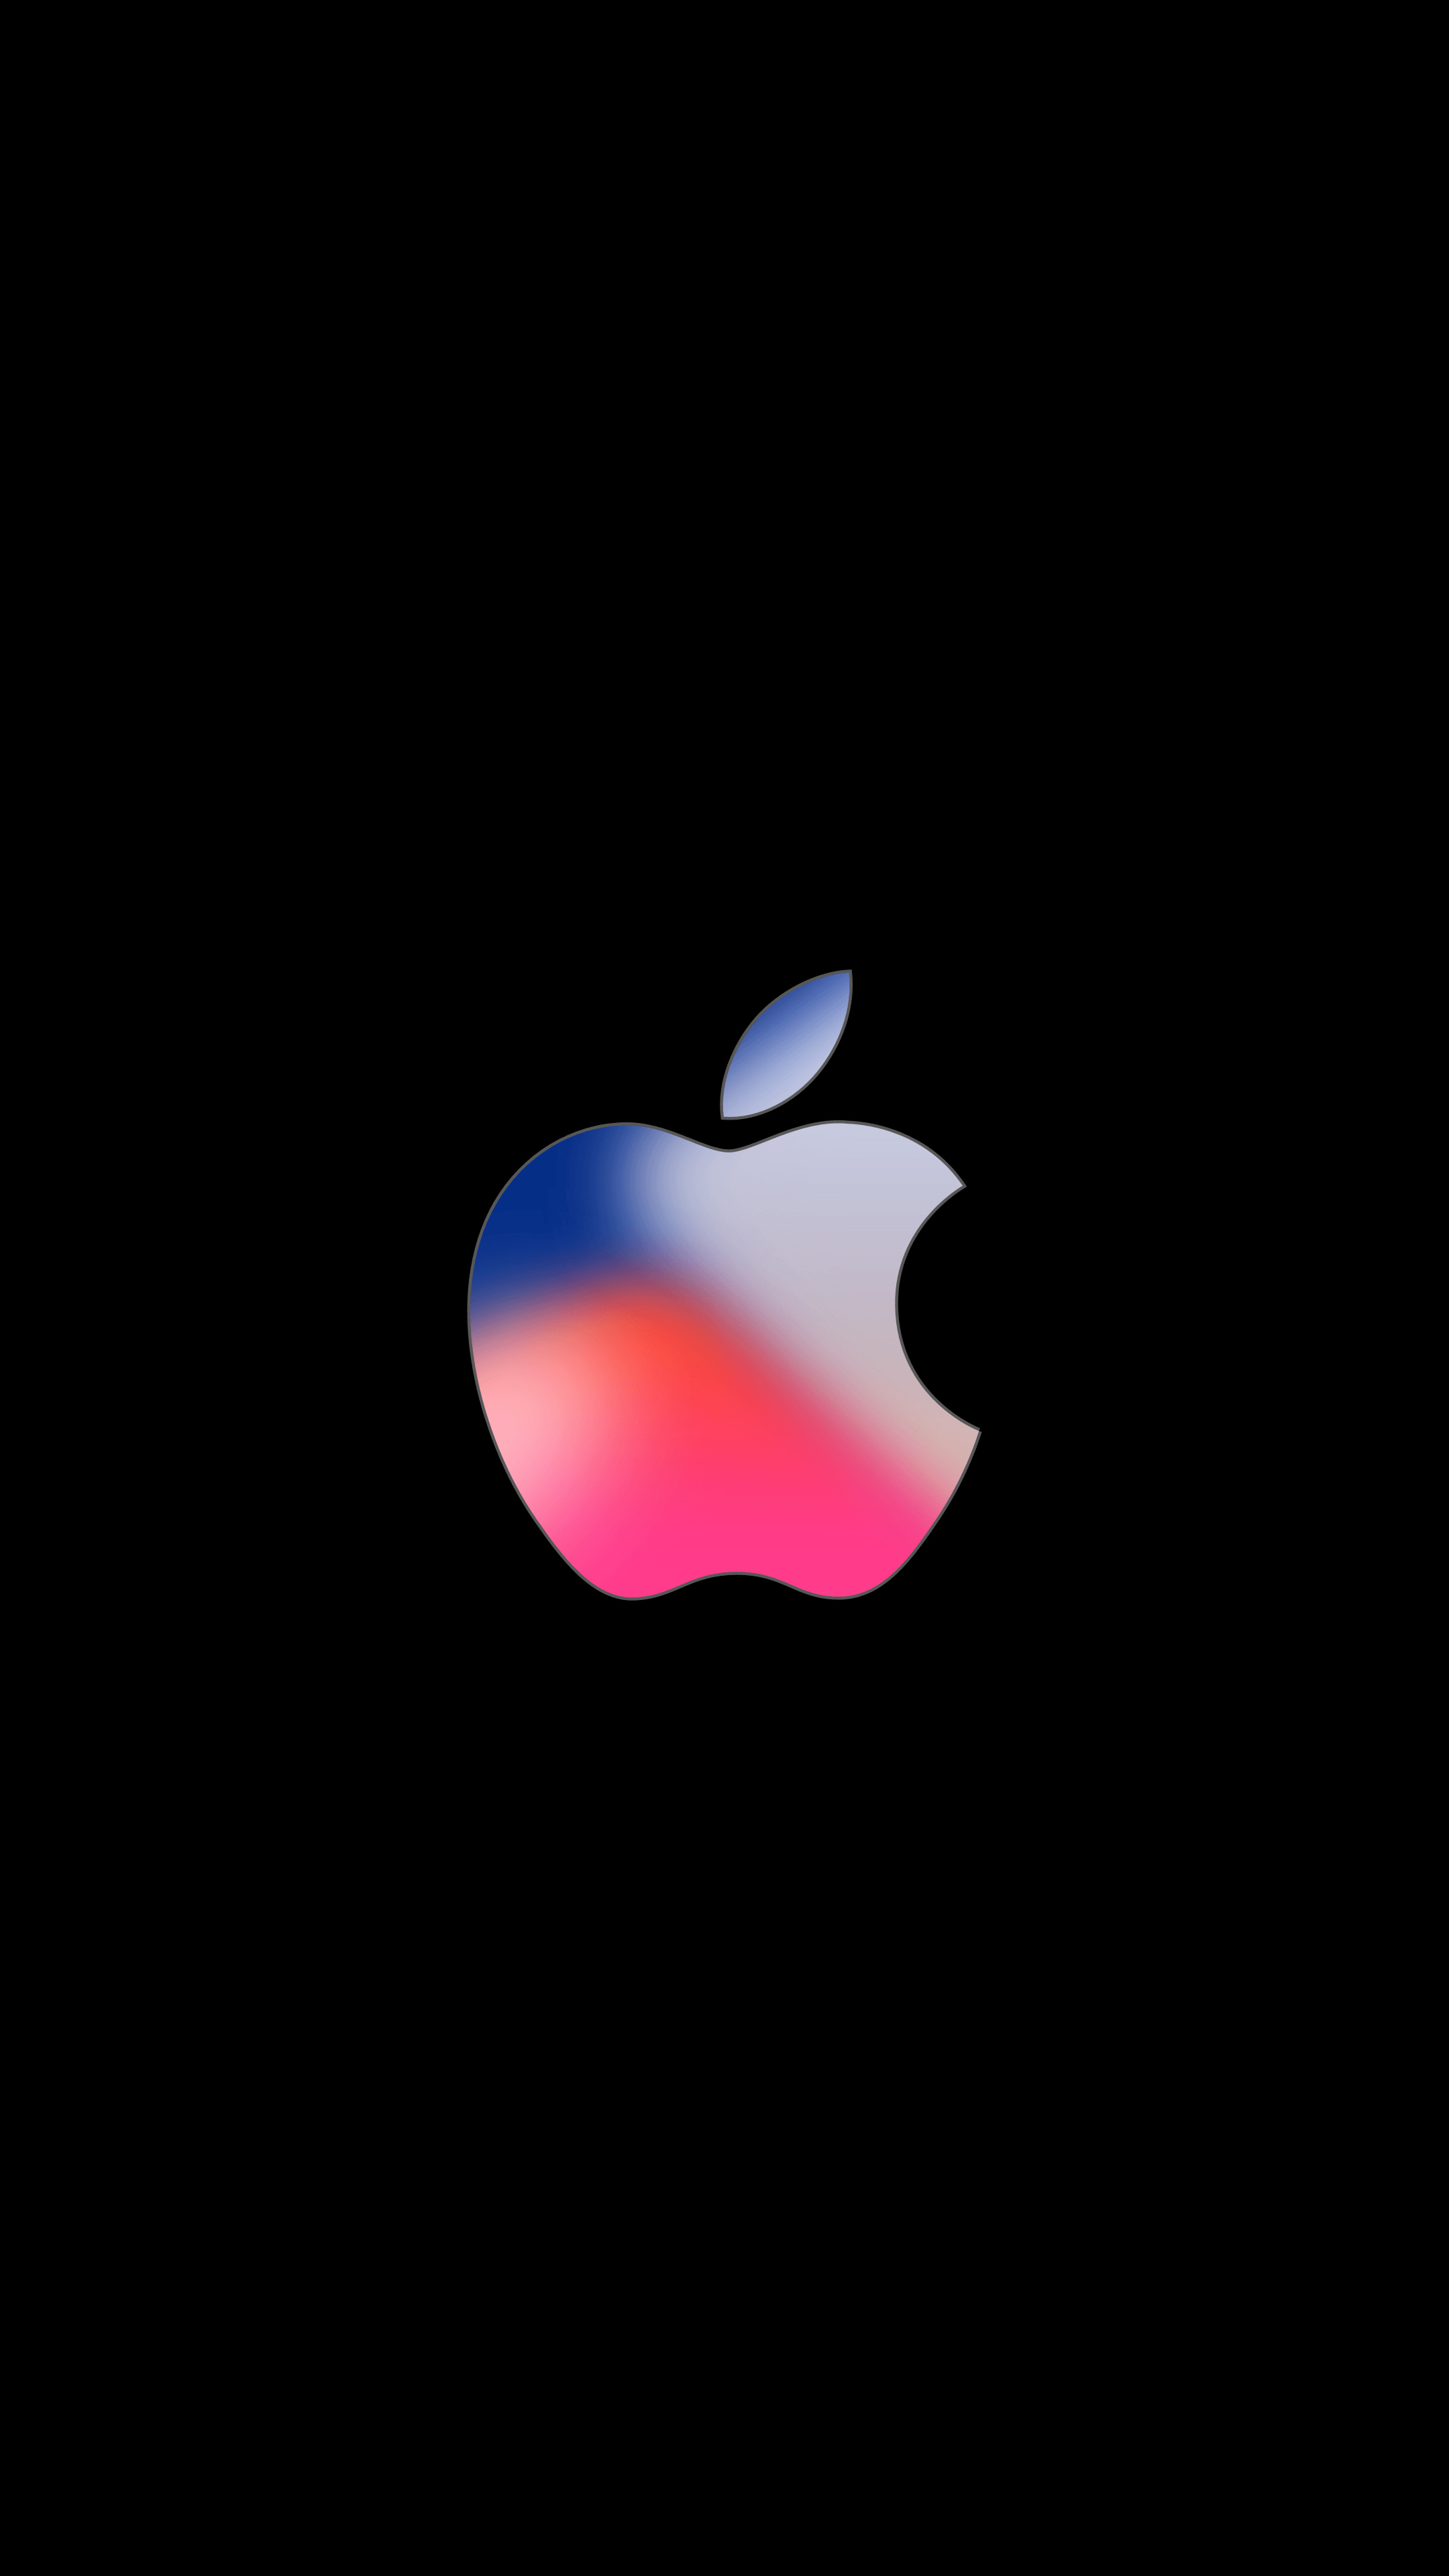 iMac Logo, iPhone brand wallpapers, Sleek and sophisticated, Apple brand loyalty, 2160x3840 4K Handy